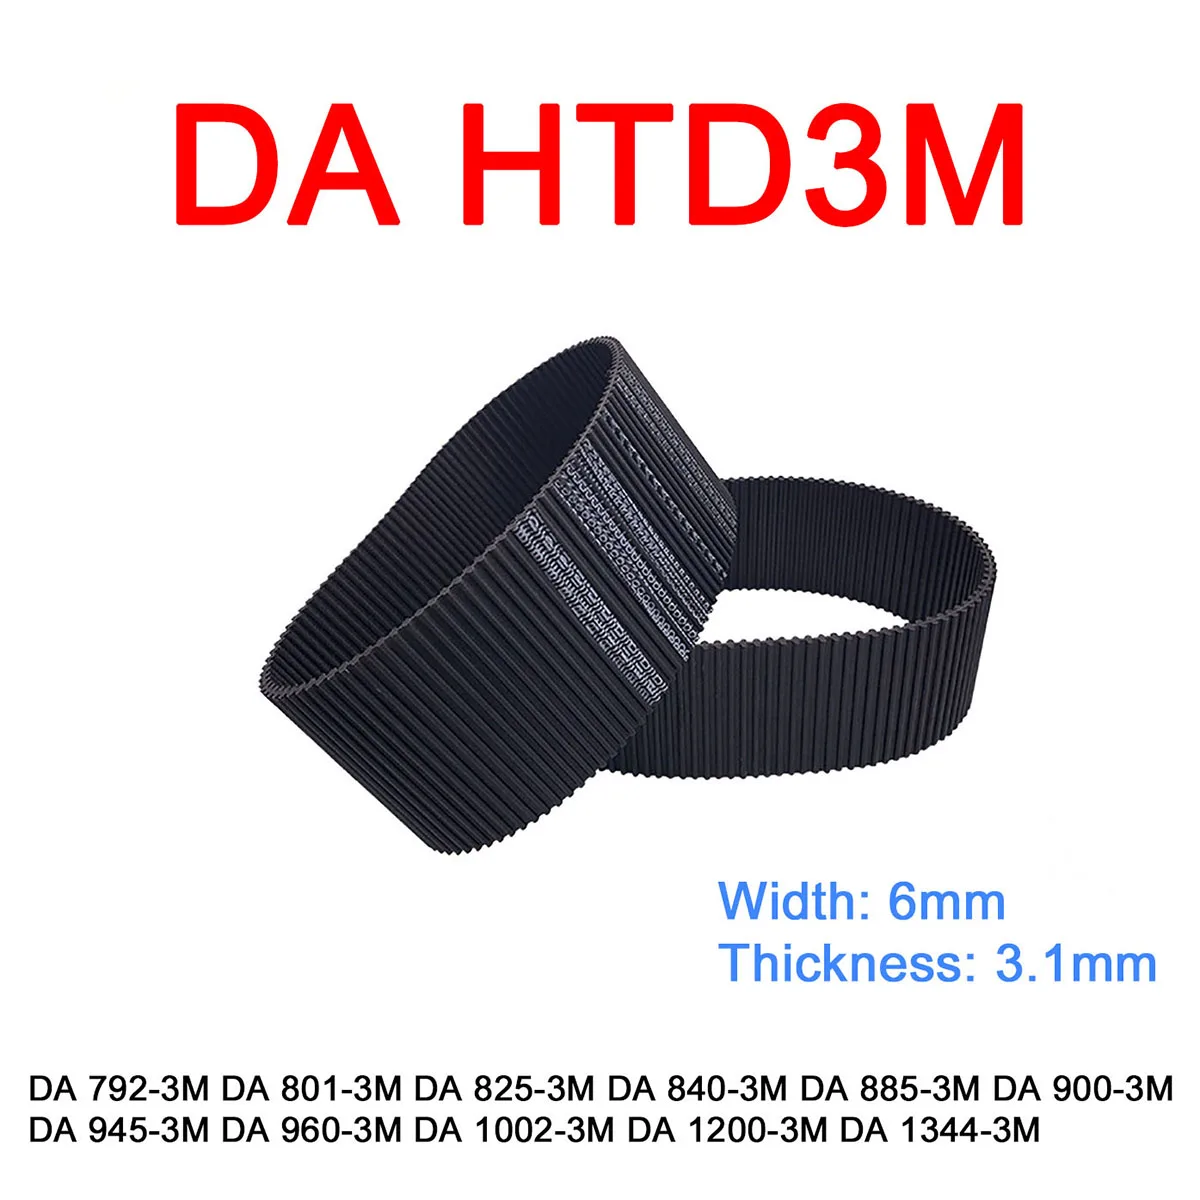 1Pc Width 6mm DA HTD 3M Rubber Arc Tooth Timing Belt Pitch Length 792 801 825 840 885 900 945 960 1002 1200 1344mm Drive Belts